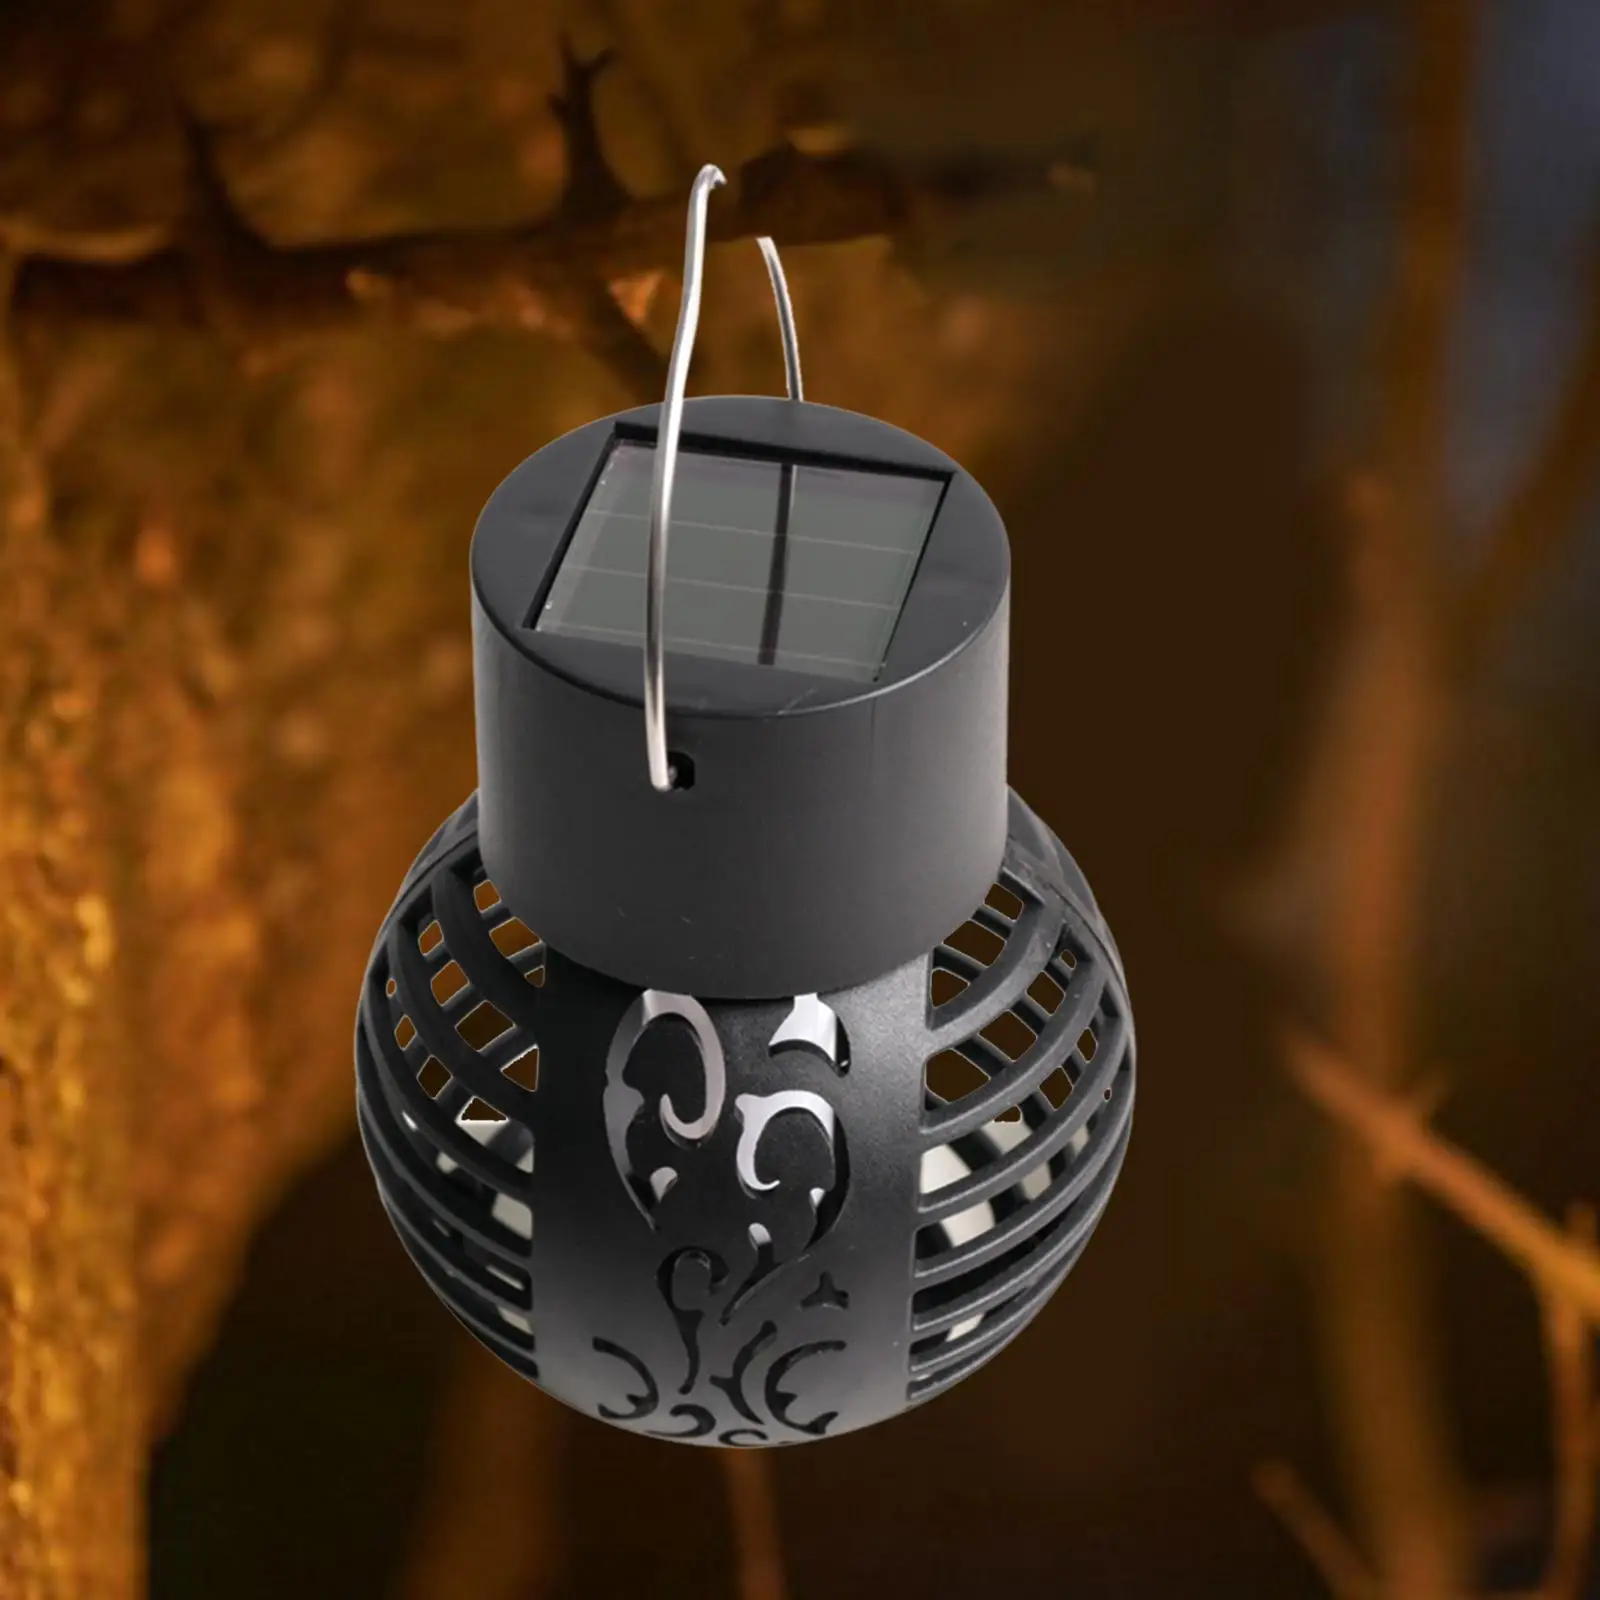 Hanger Solar Lantern Lights Ornament Hollow Retro Style Decorative Outdoor Lamp for Hiking